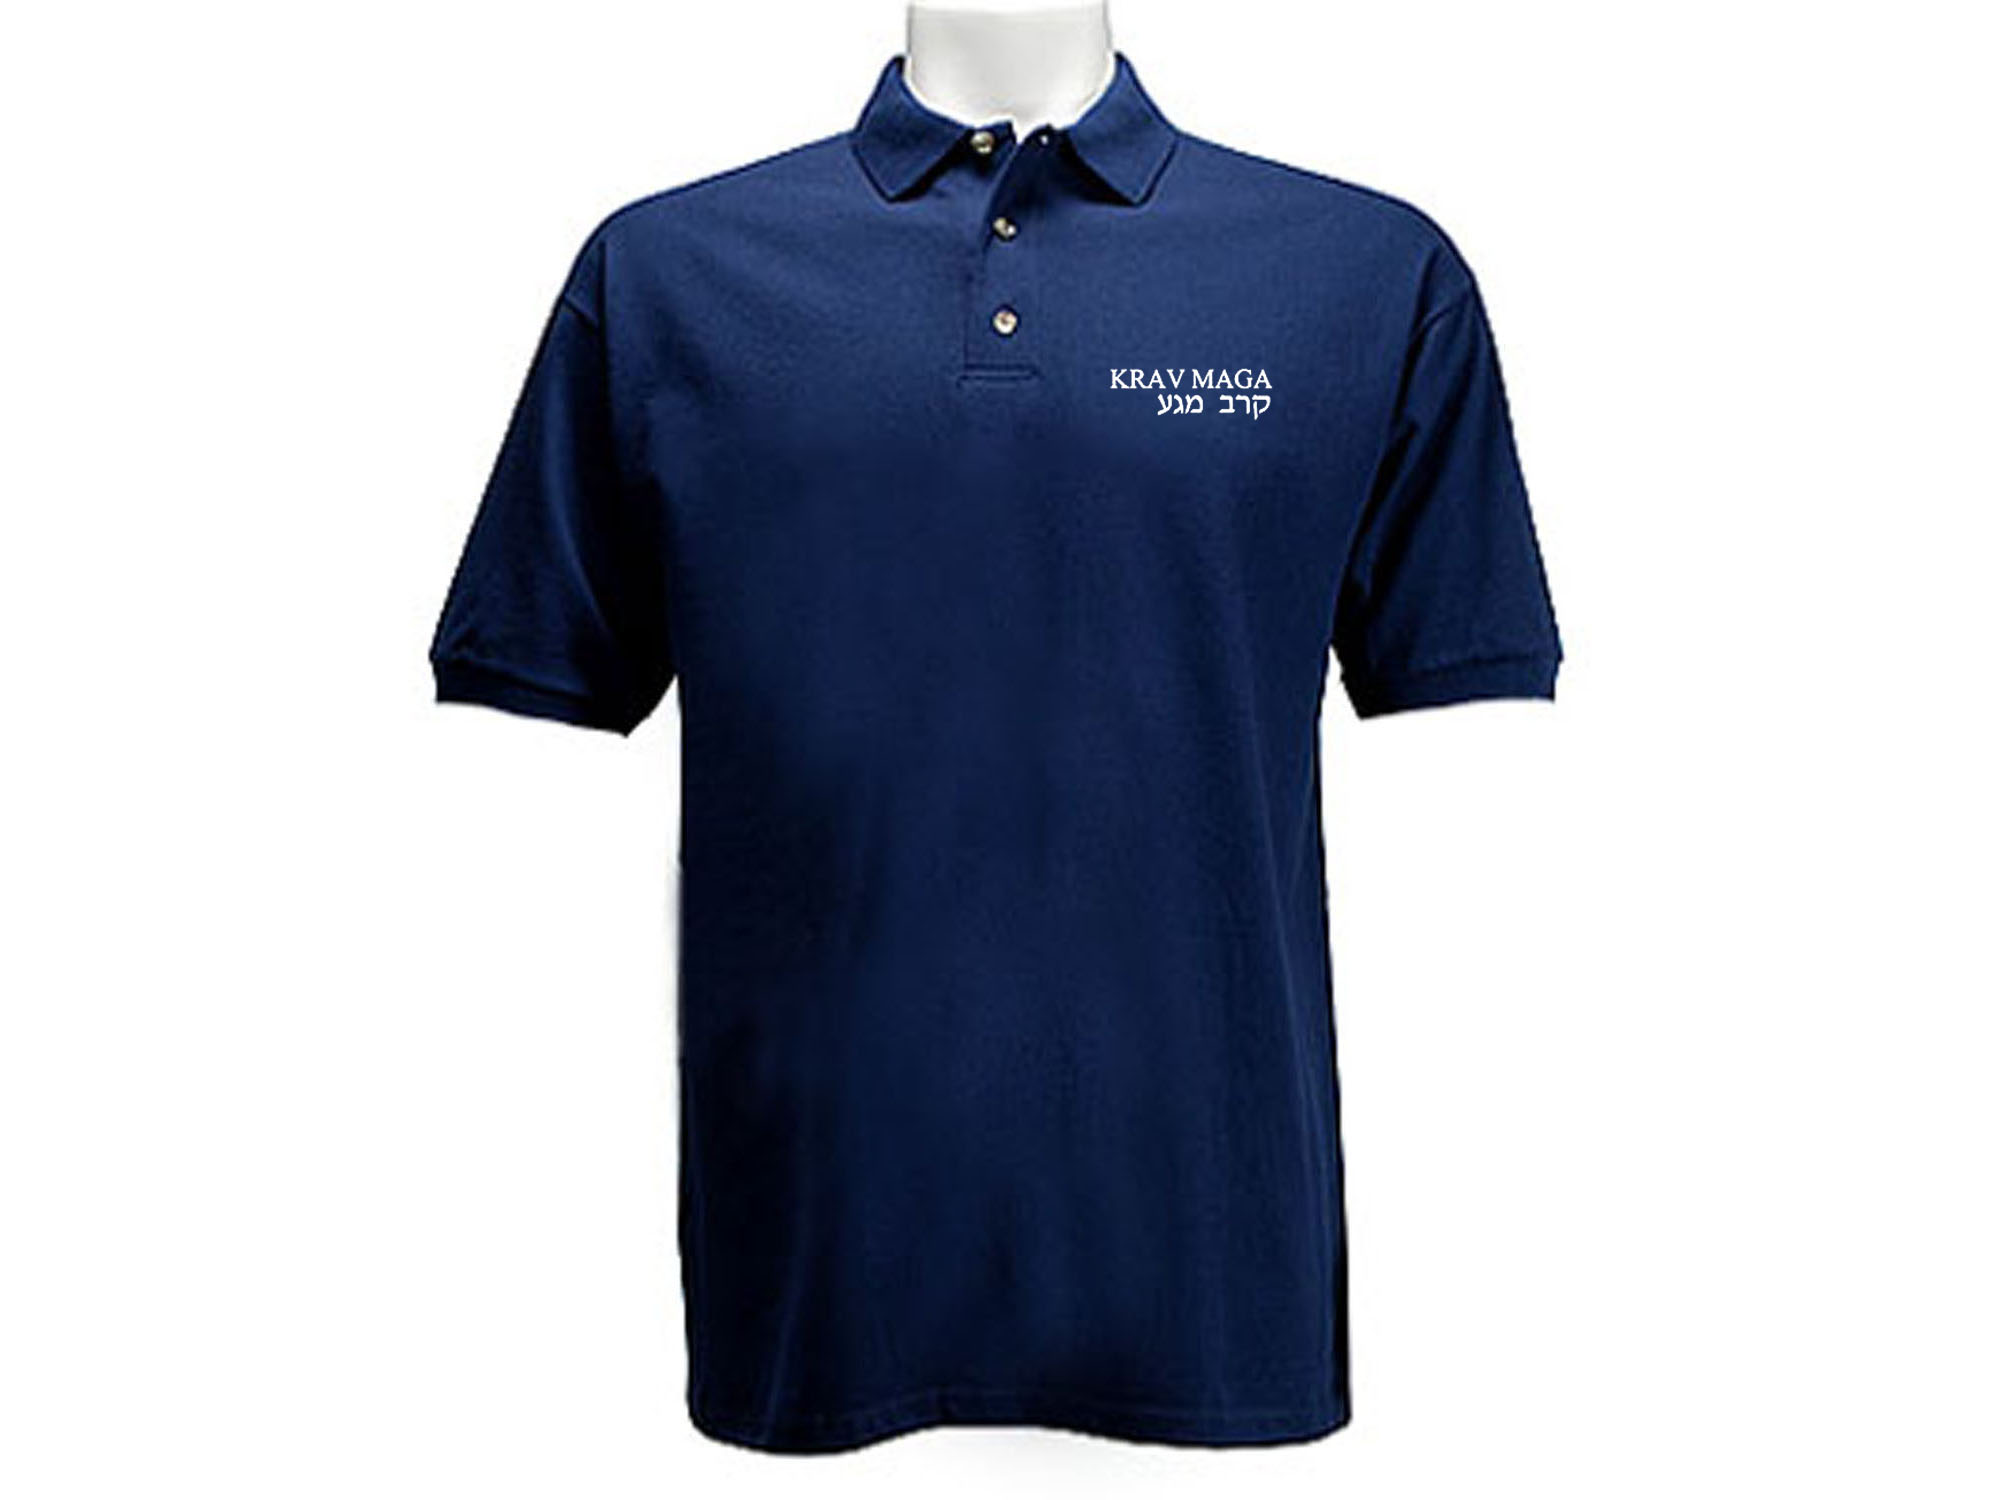 Krav maga English/Hebrew polo style navy blue t-shirt 5